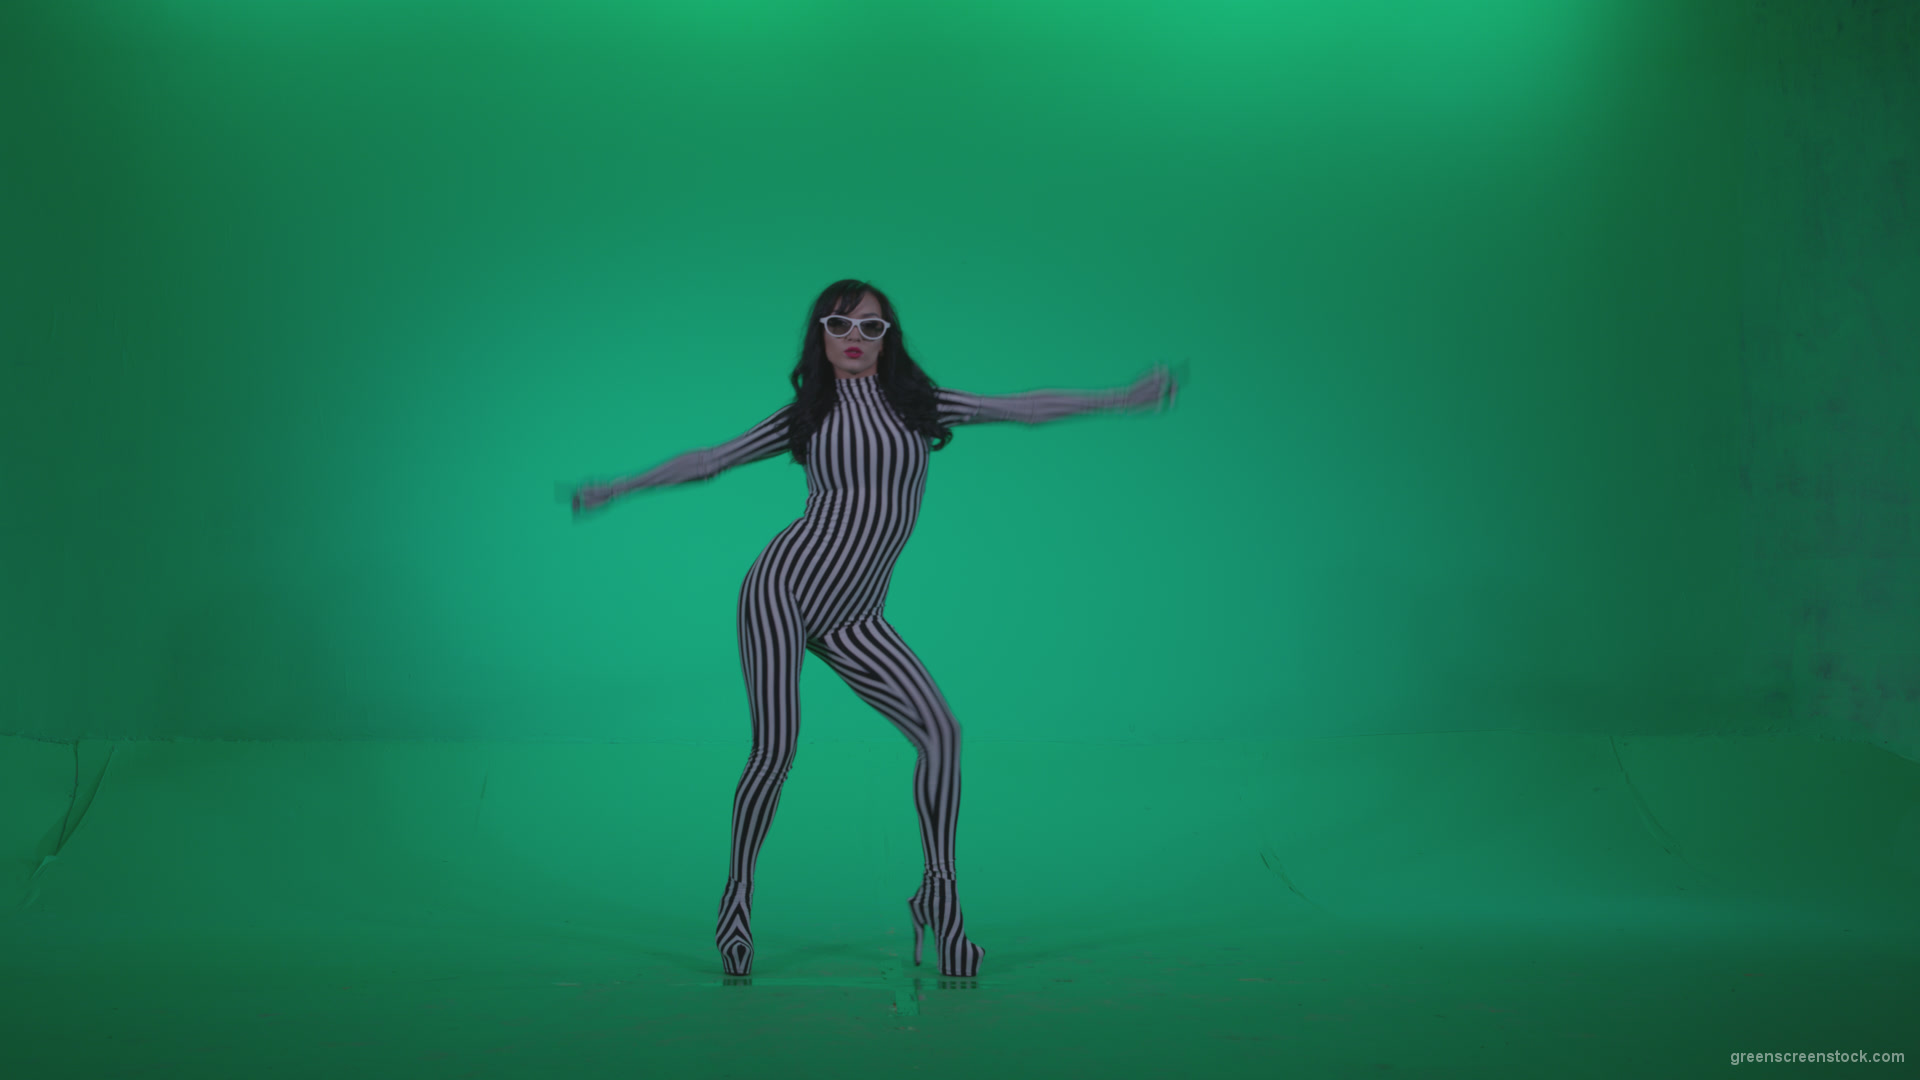 Go-go-Dancer-White-Stripes-s7-Green-Screen-Video-Footage_002 Green Screen Stock